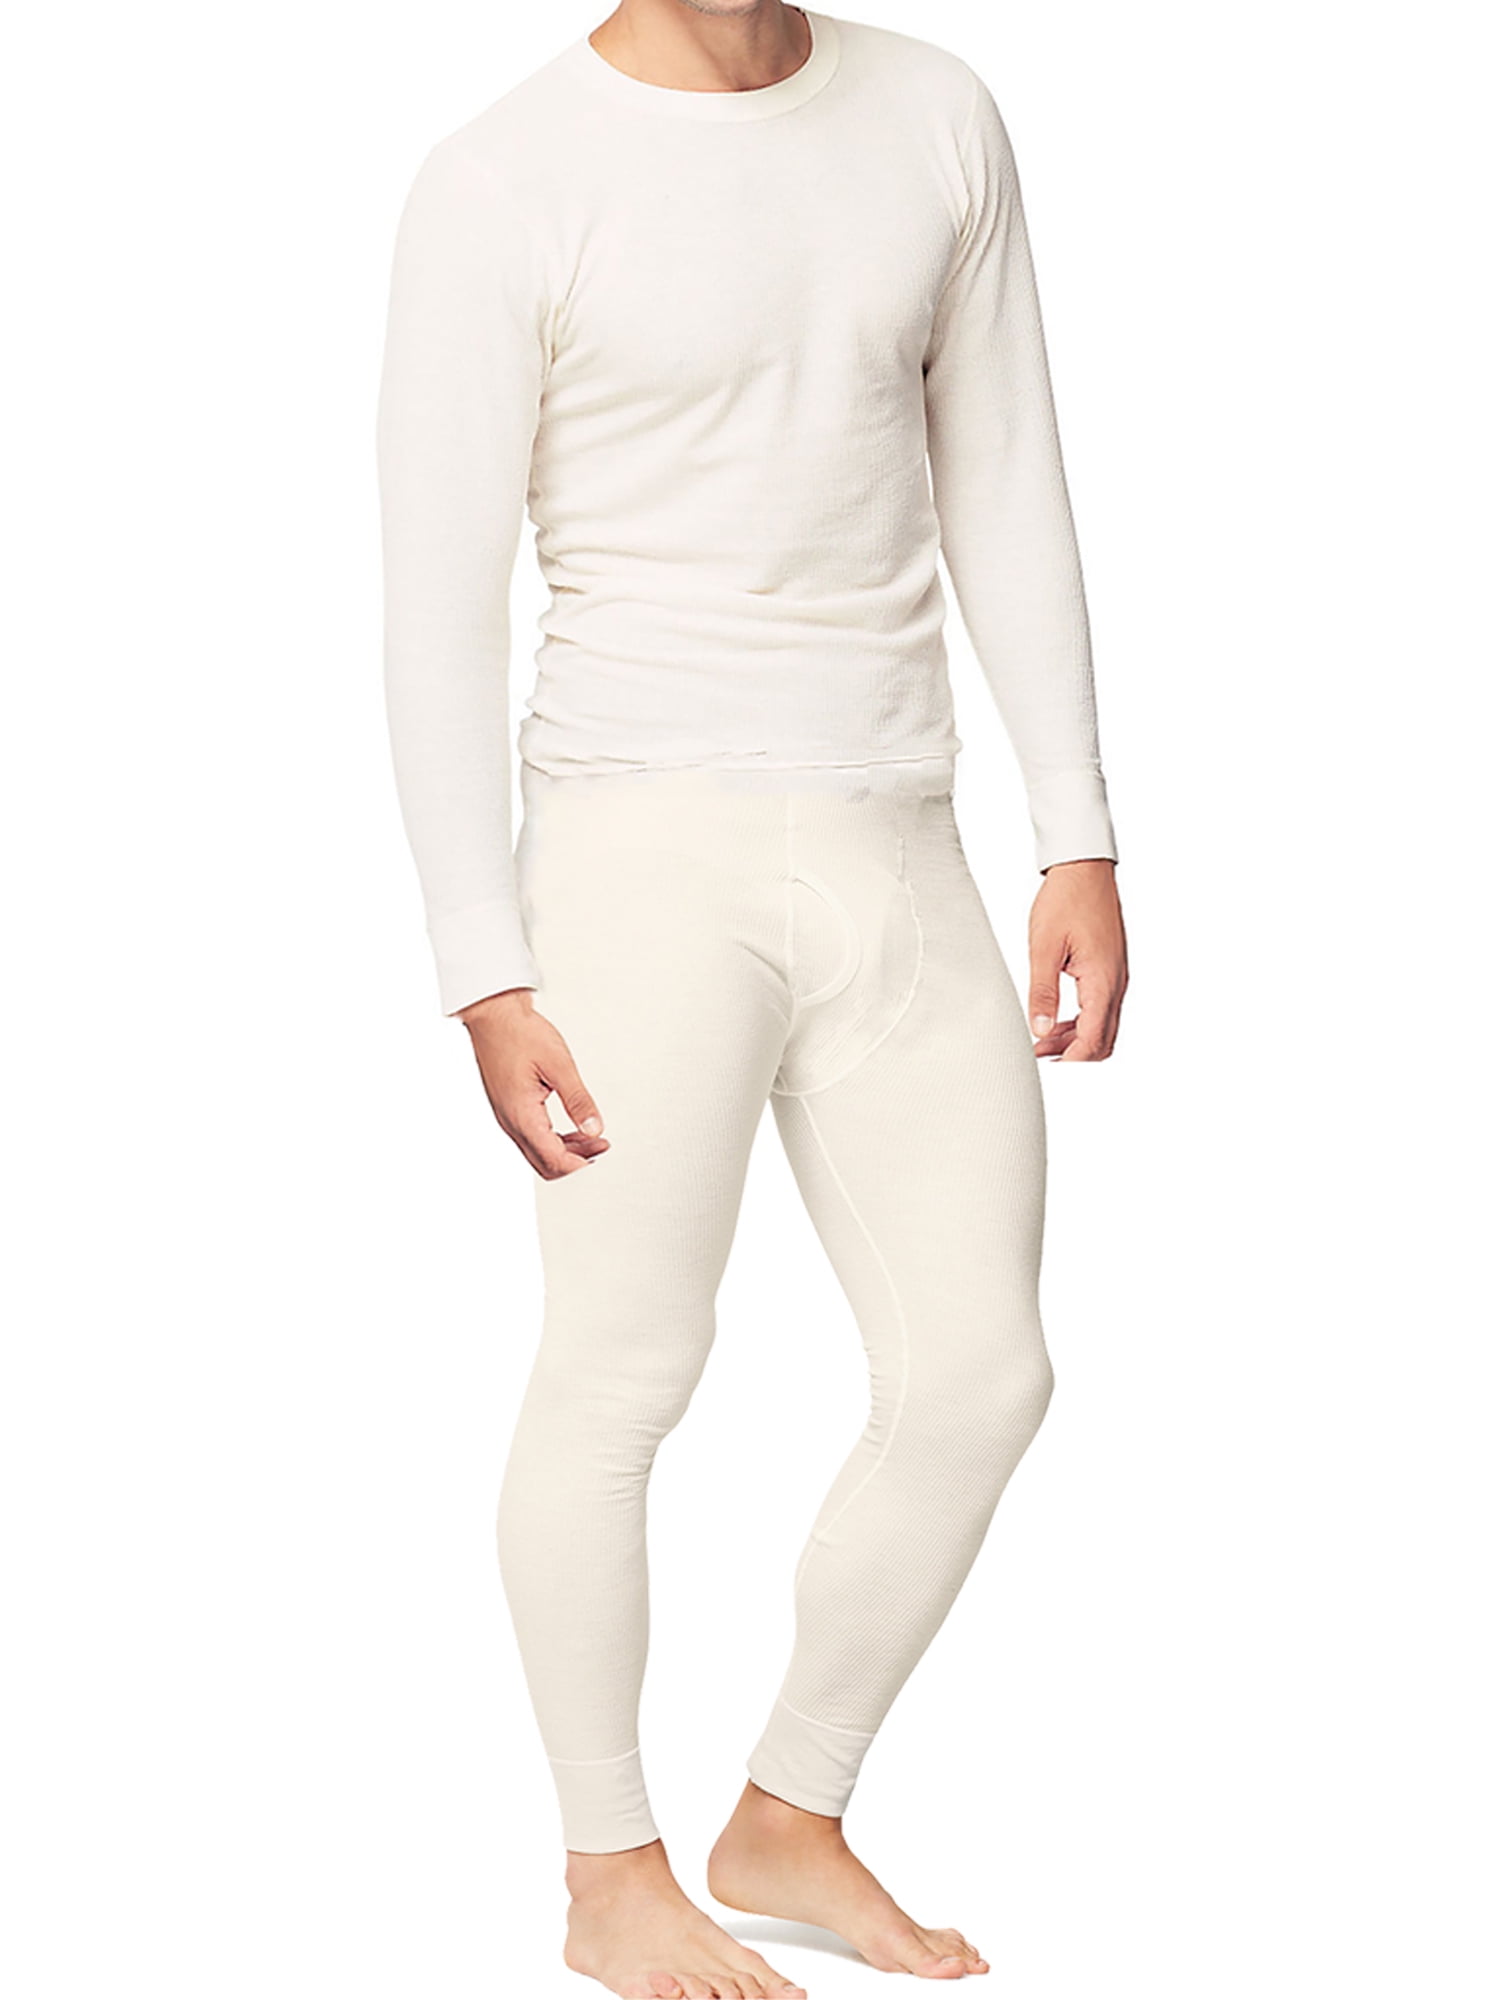 Serecofo Mens Thermal Underwear Set Brushed Fleece Lining Long Sleeve Shirt Top & Full Length Pants Long Johns Bottom for Men Soft & Warm TM01